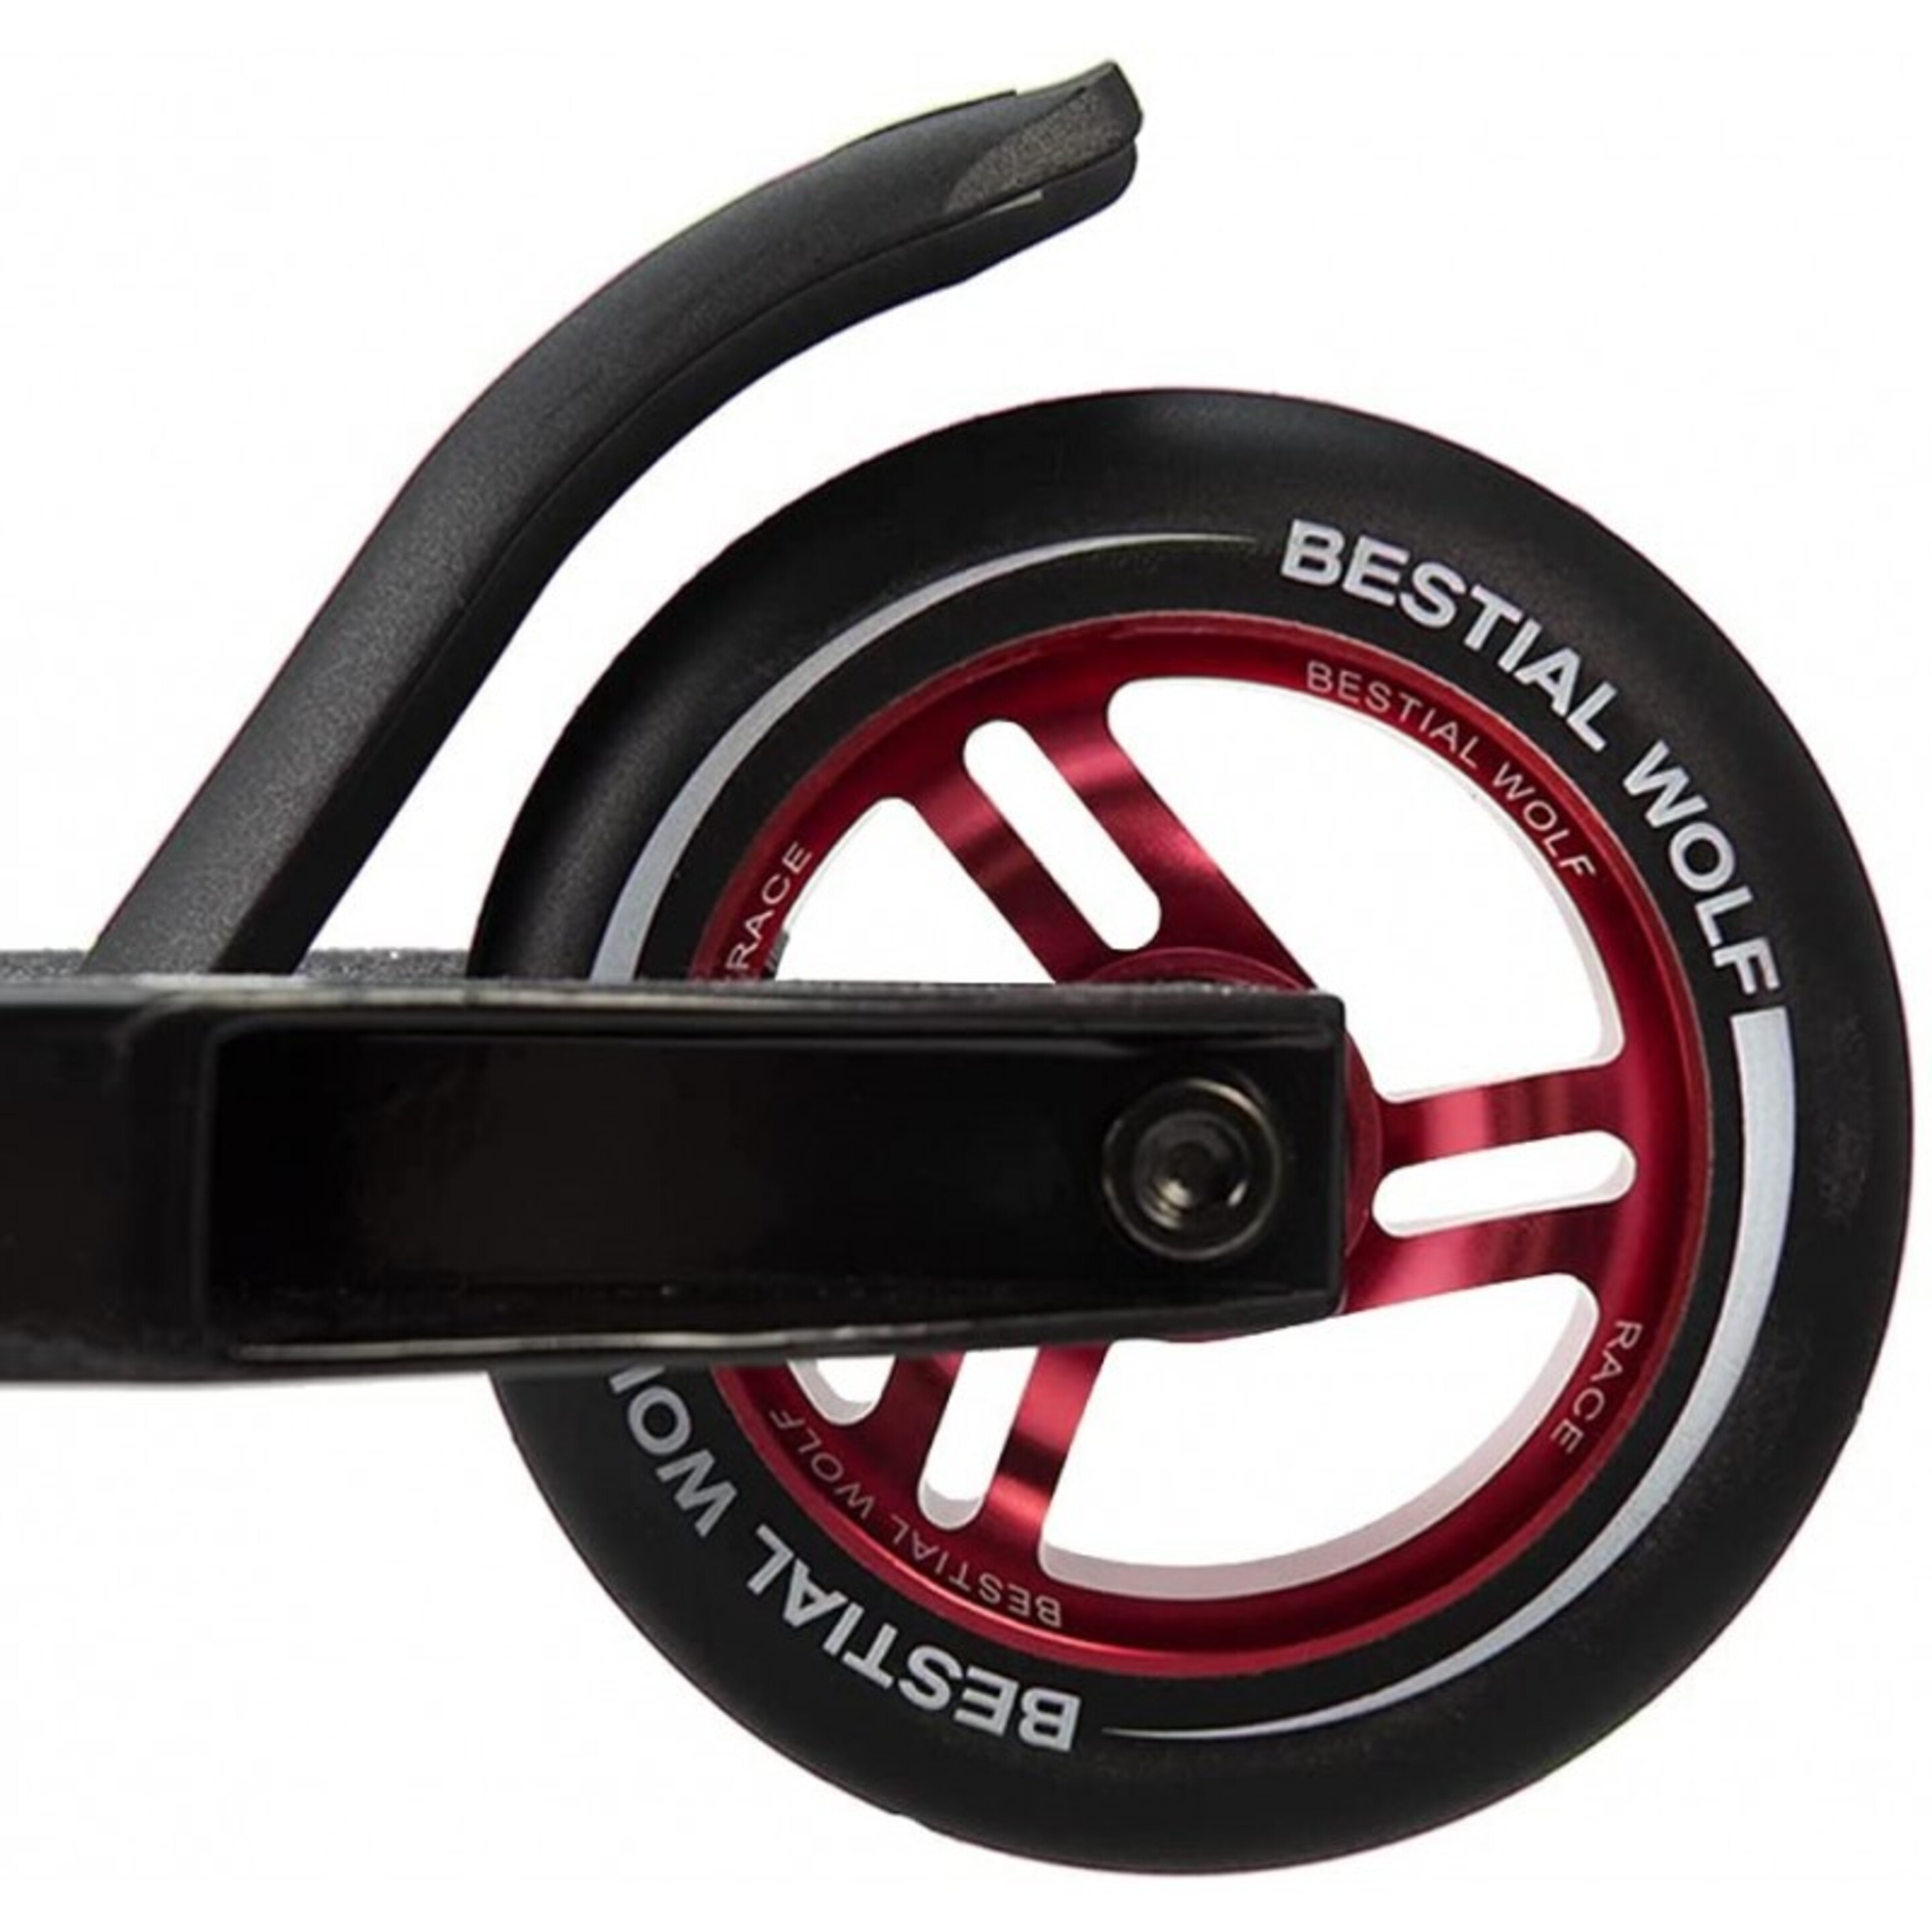 Bestial Wolf Race Wheel Core Black 100mm - Rojo - Recambio Ruedas Scooter  MKP